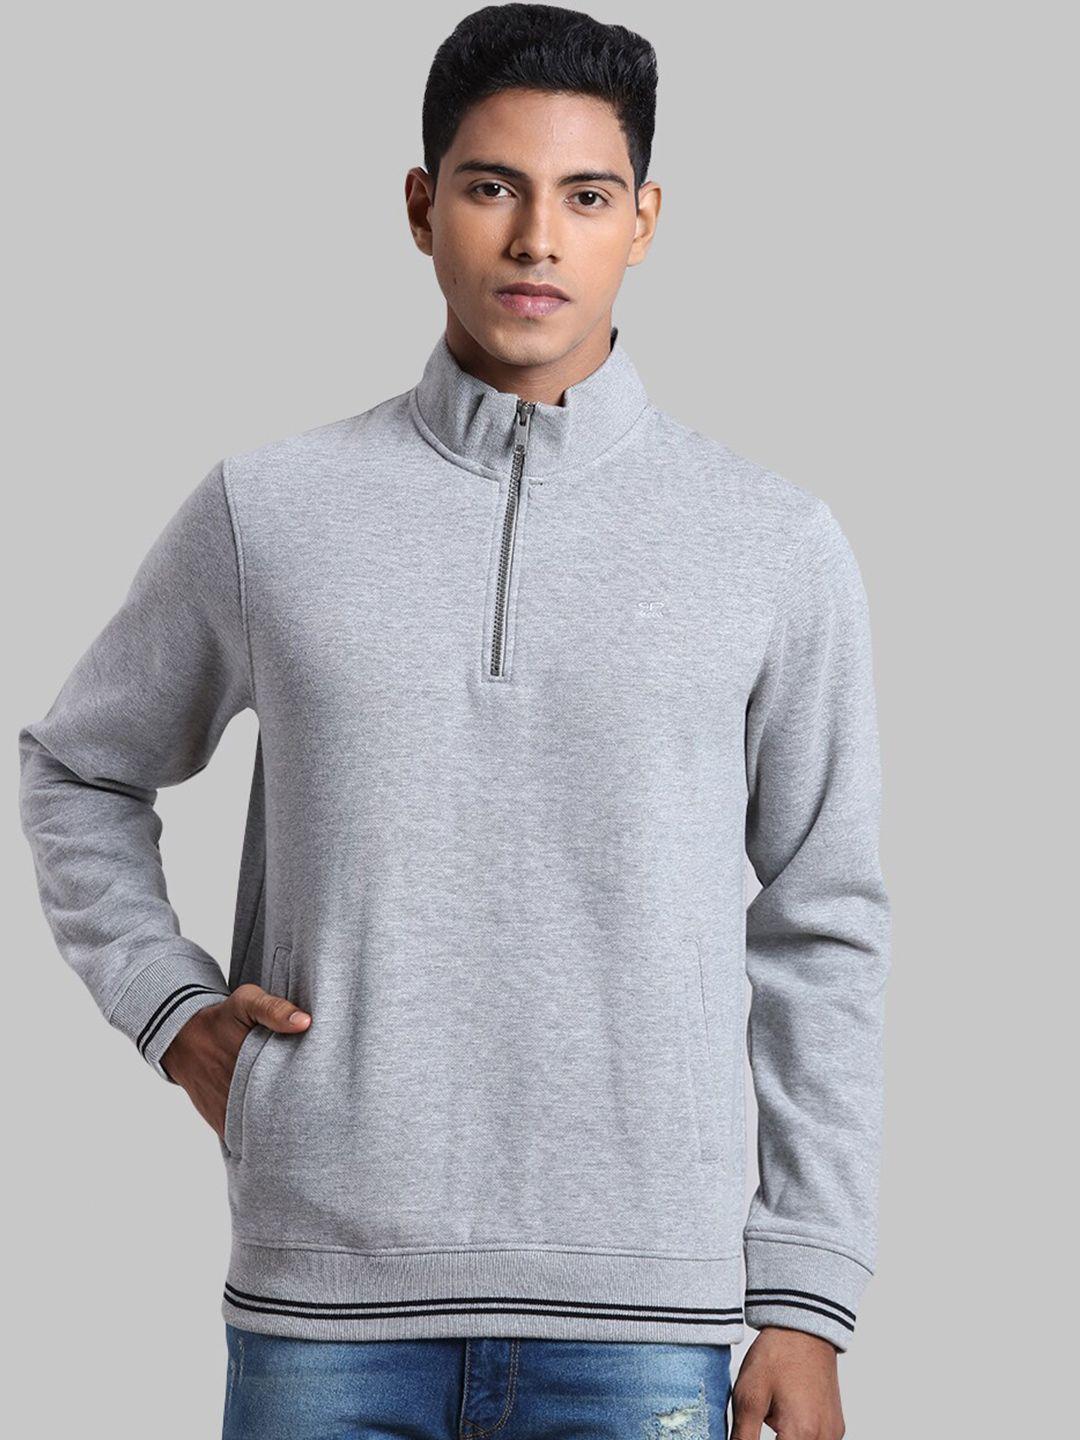 colorplus-men-grey-cotton-sweatshirt